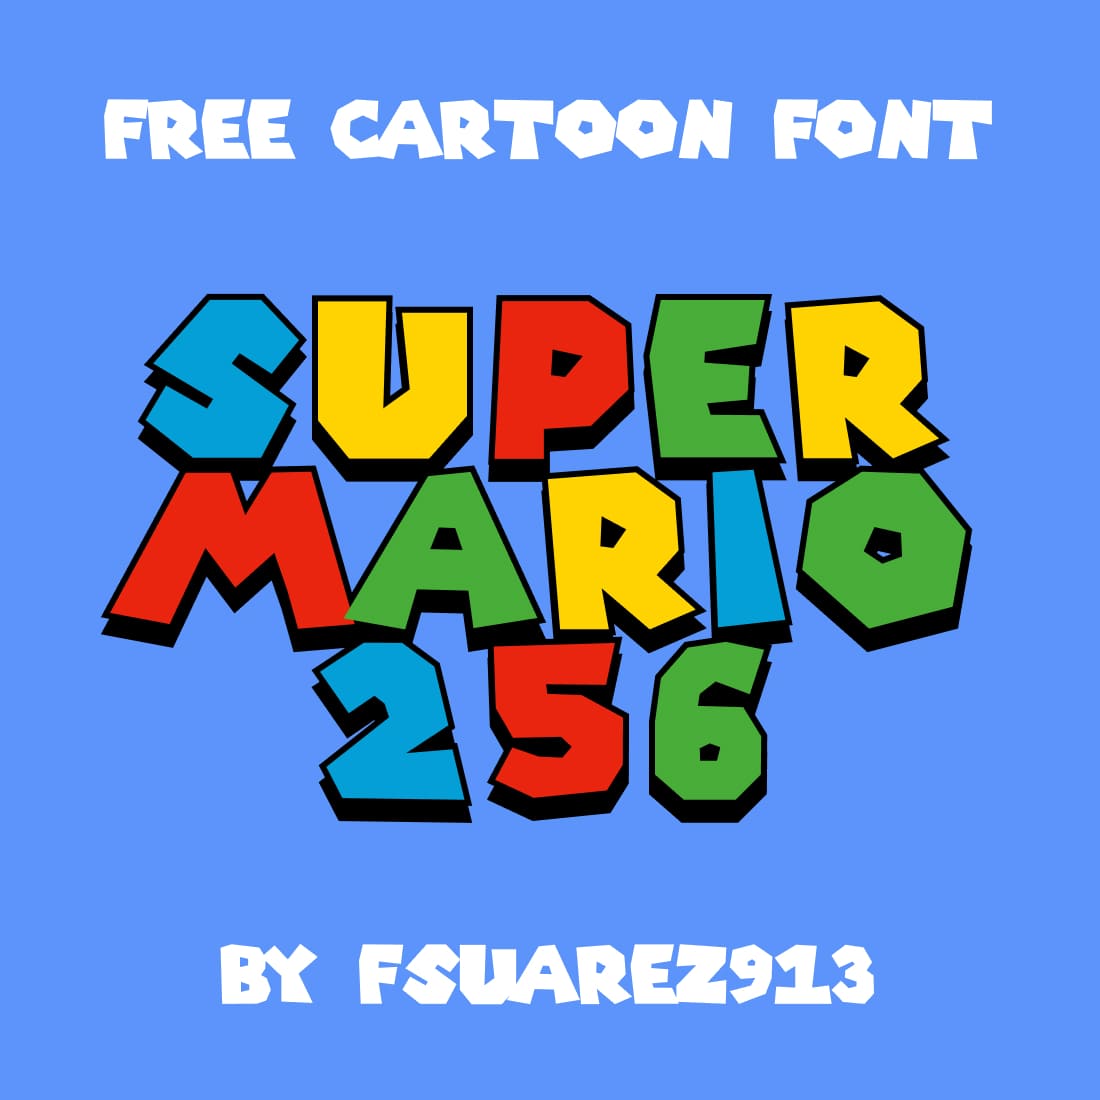 Mario font free